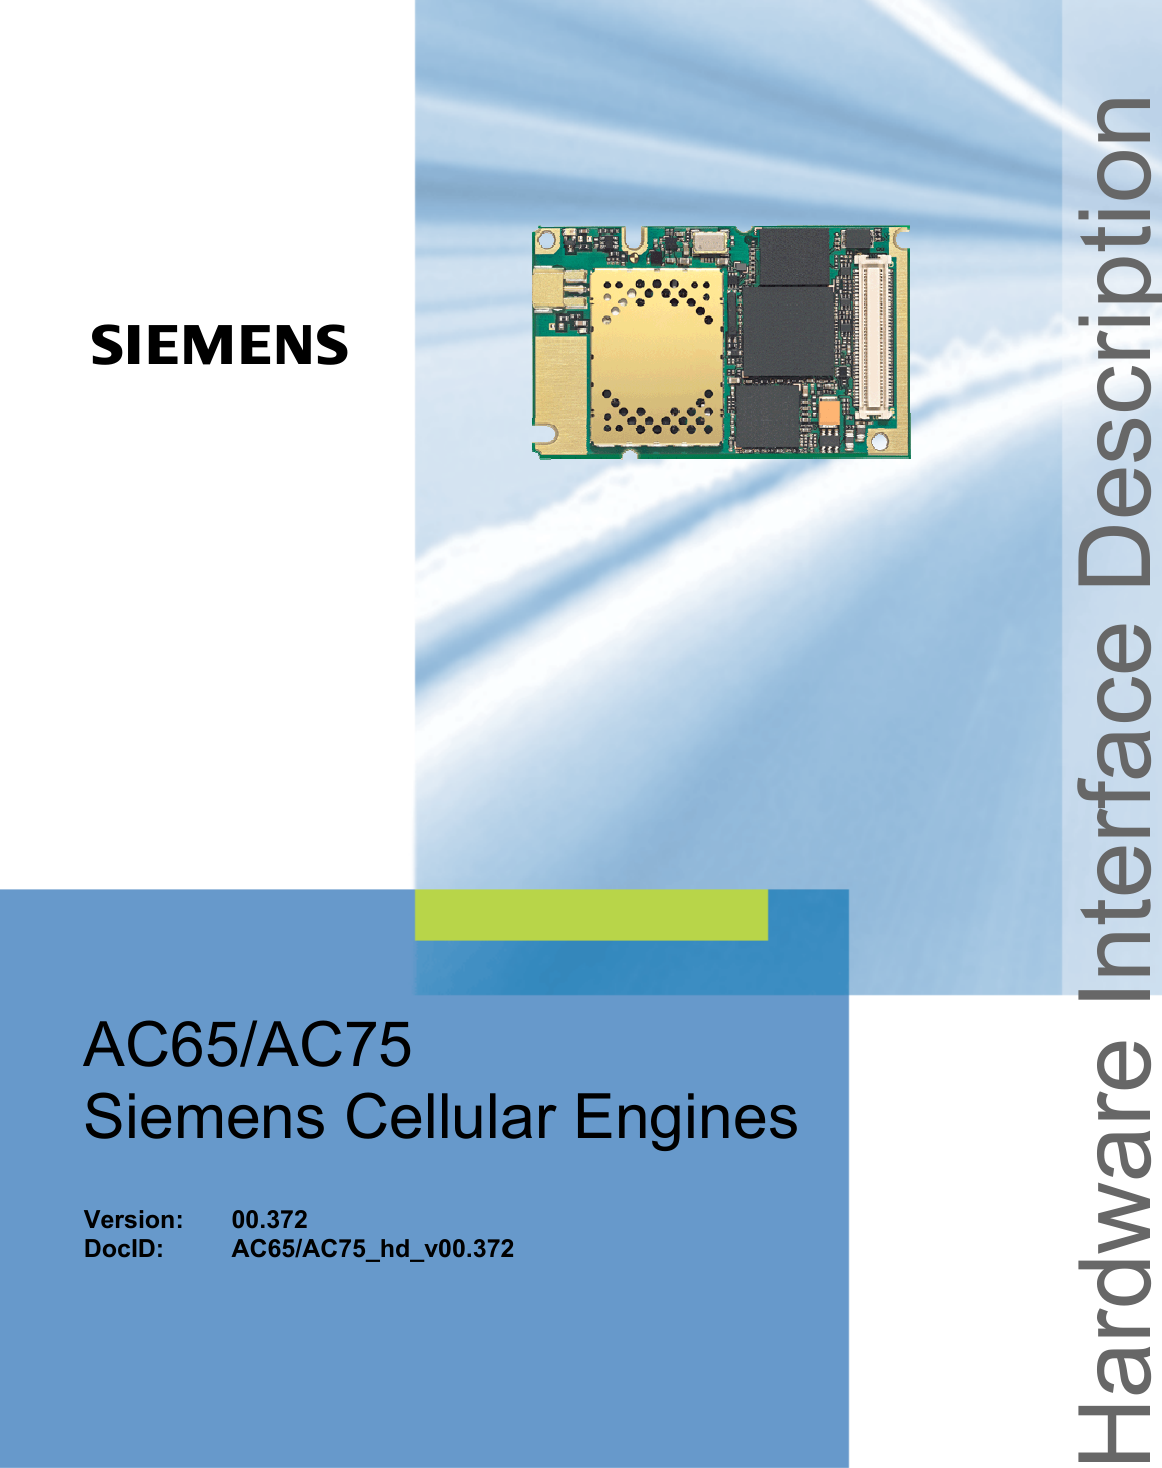  Hardware Interface Description AC65/AC75 Siemens Cellular Engines   Version: 00.372 DocID: AC65/AC75_hd_v00.372 s 